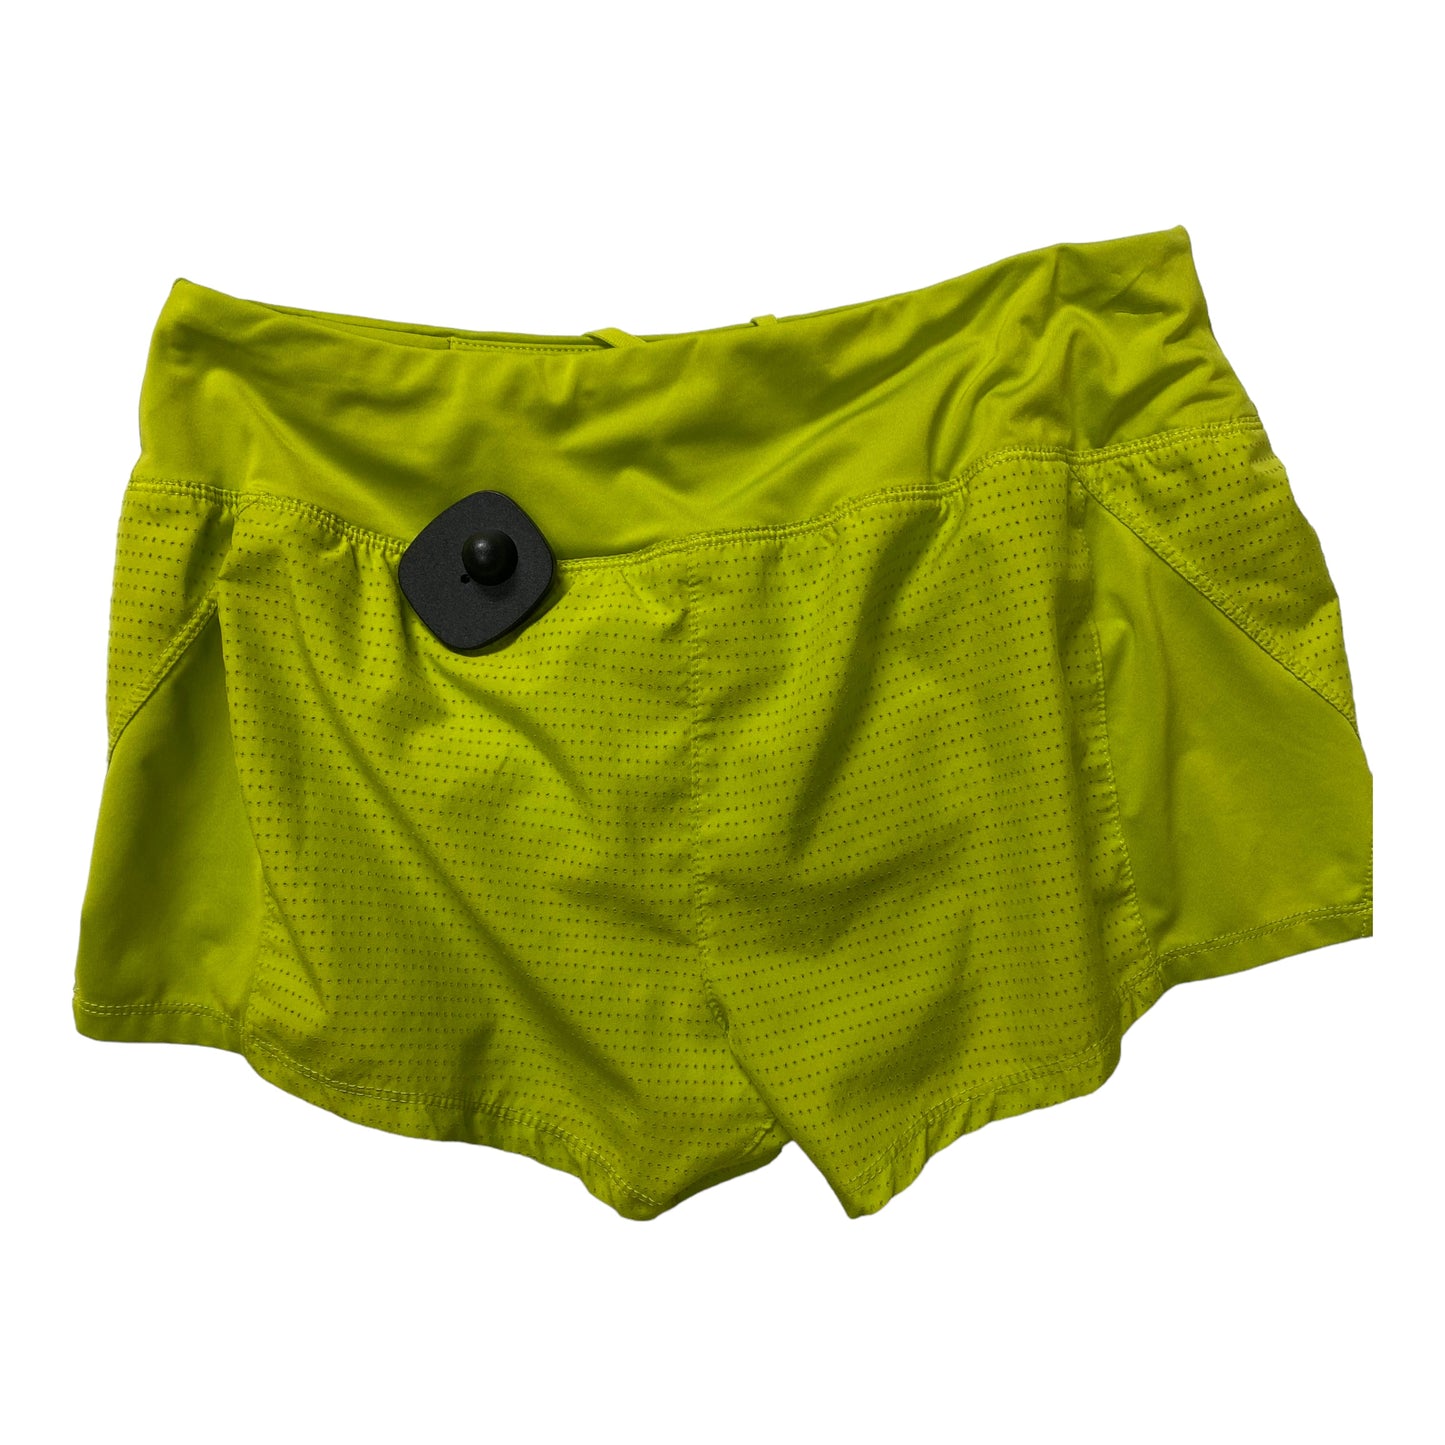 Green Shorts Nike, Size S